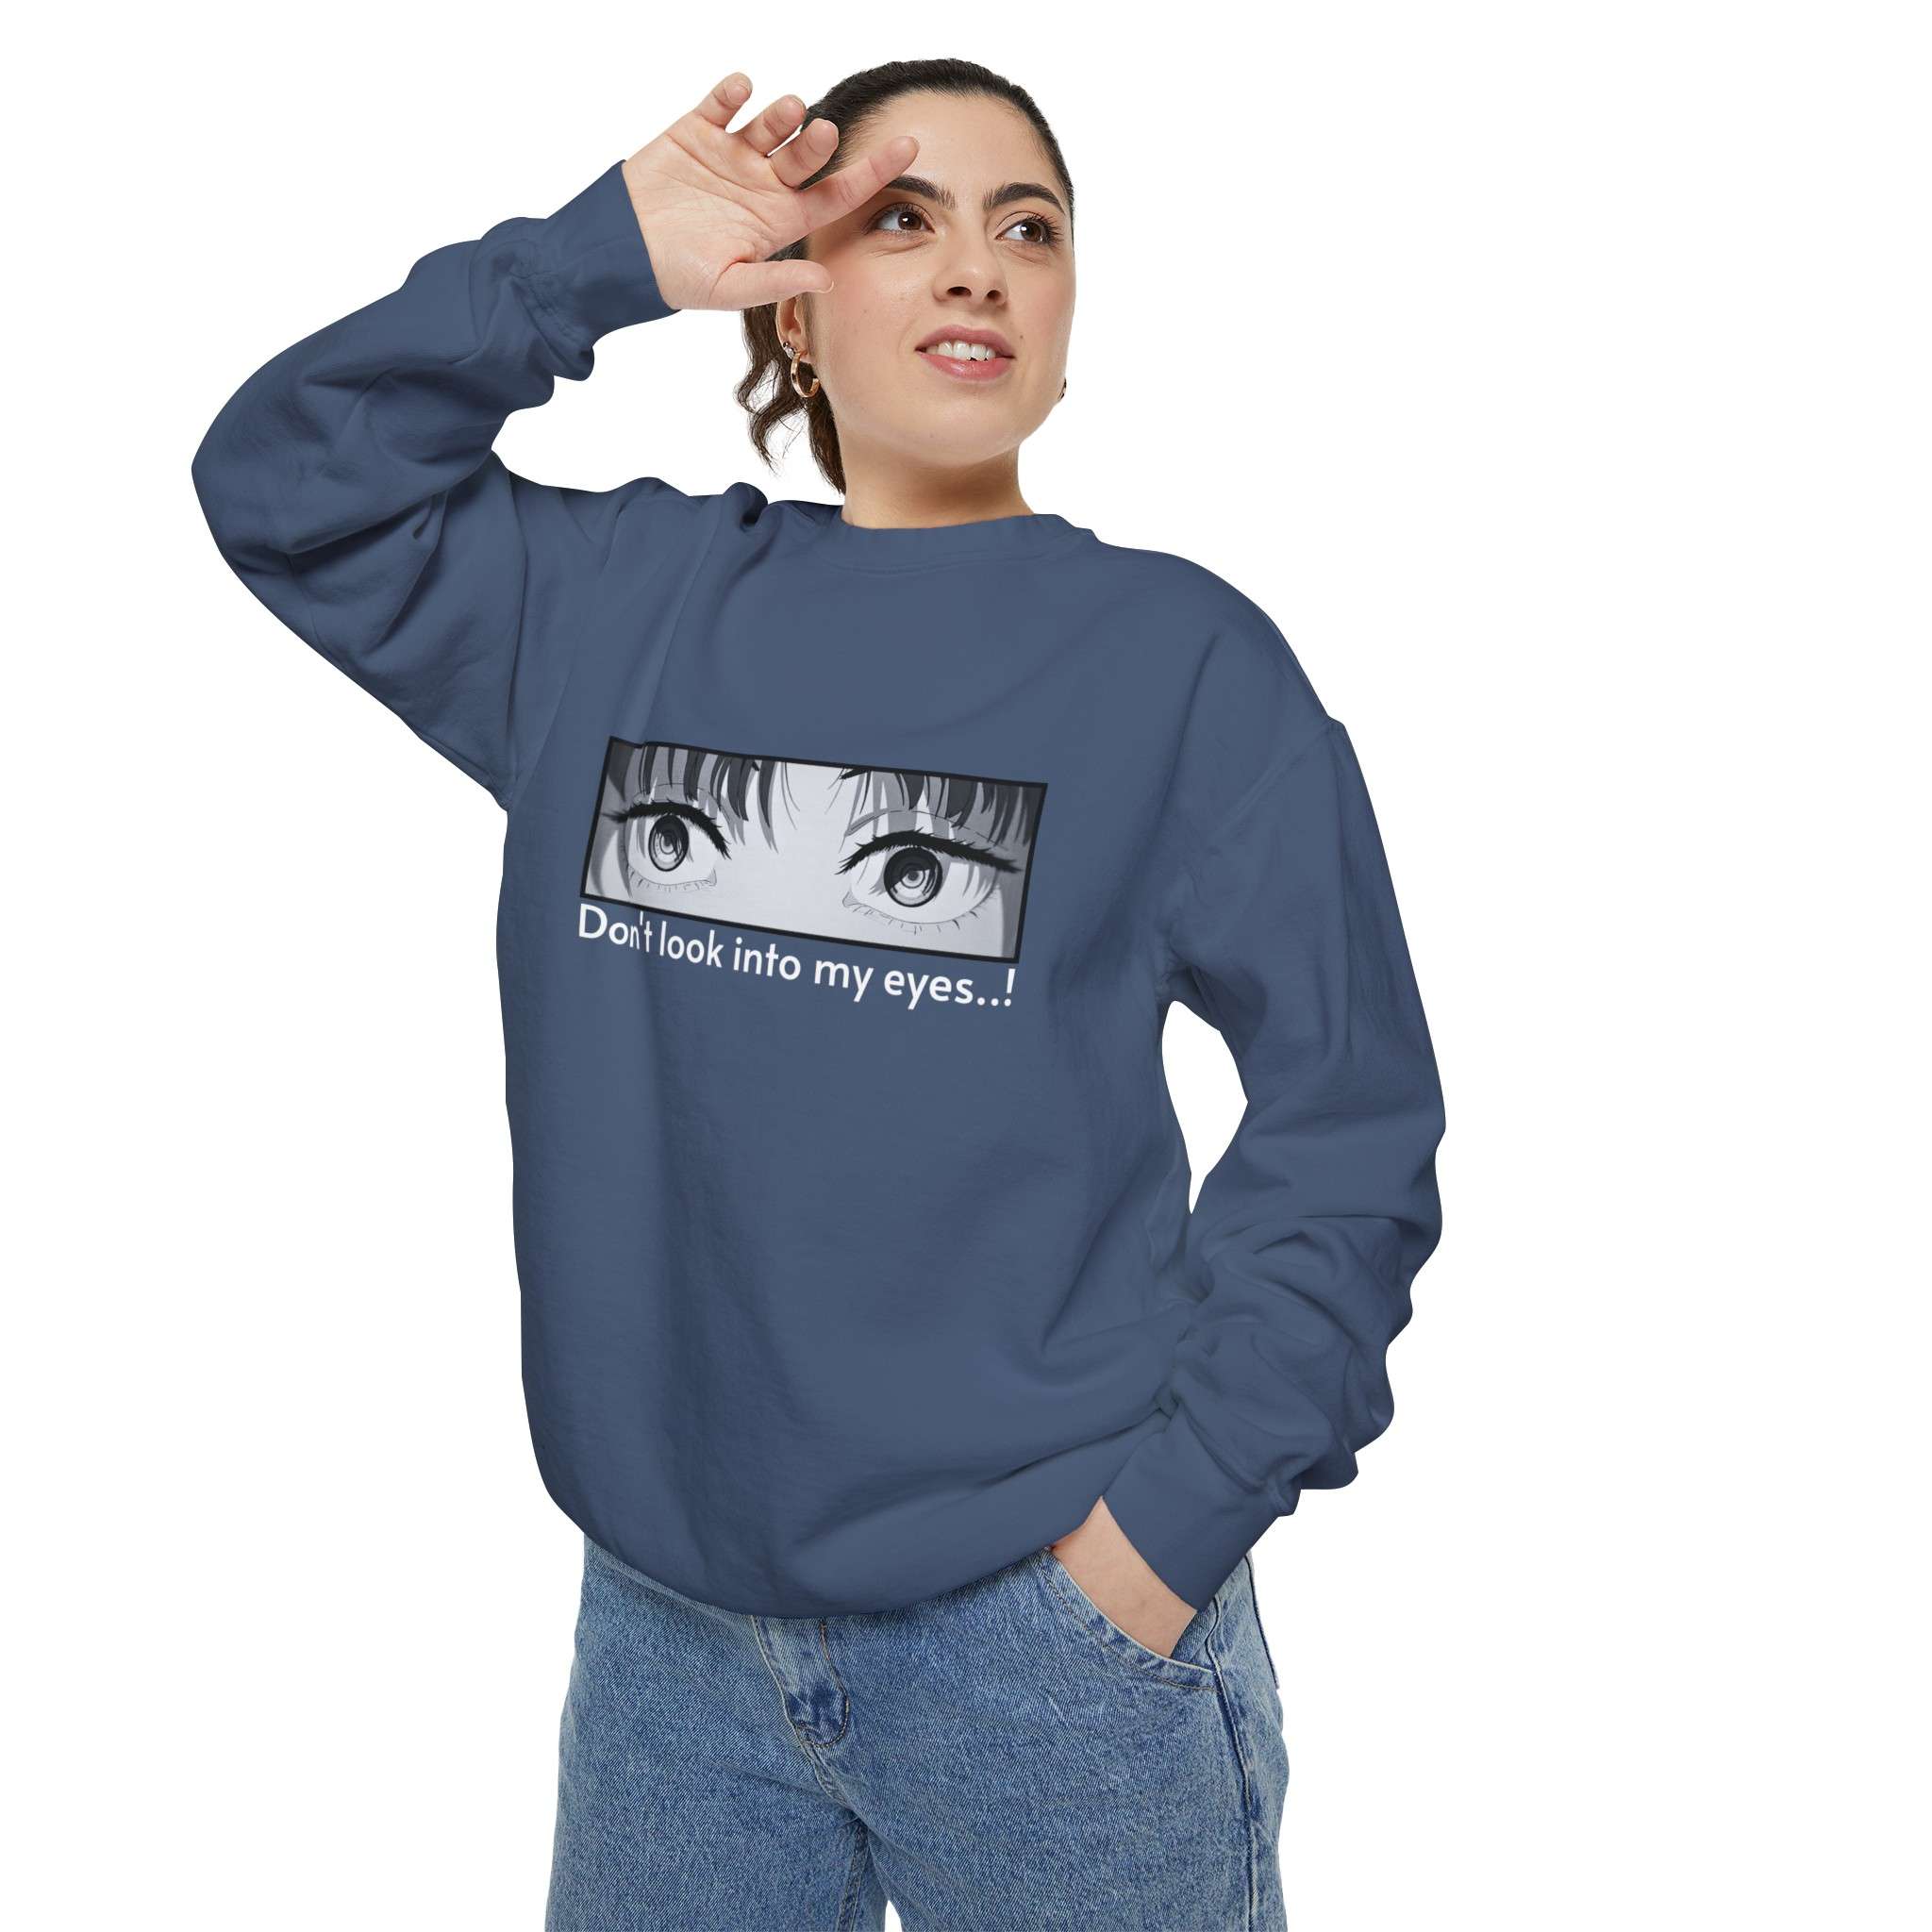 Makima Inspired Unisex Garment-Dyed Sweatshirt